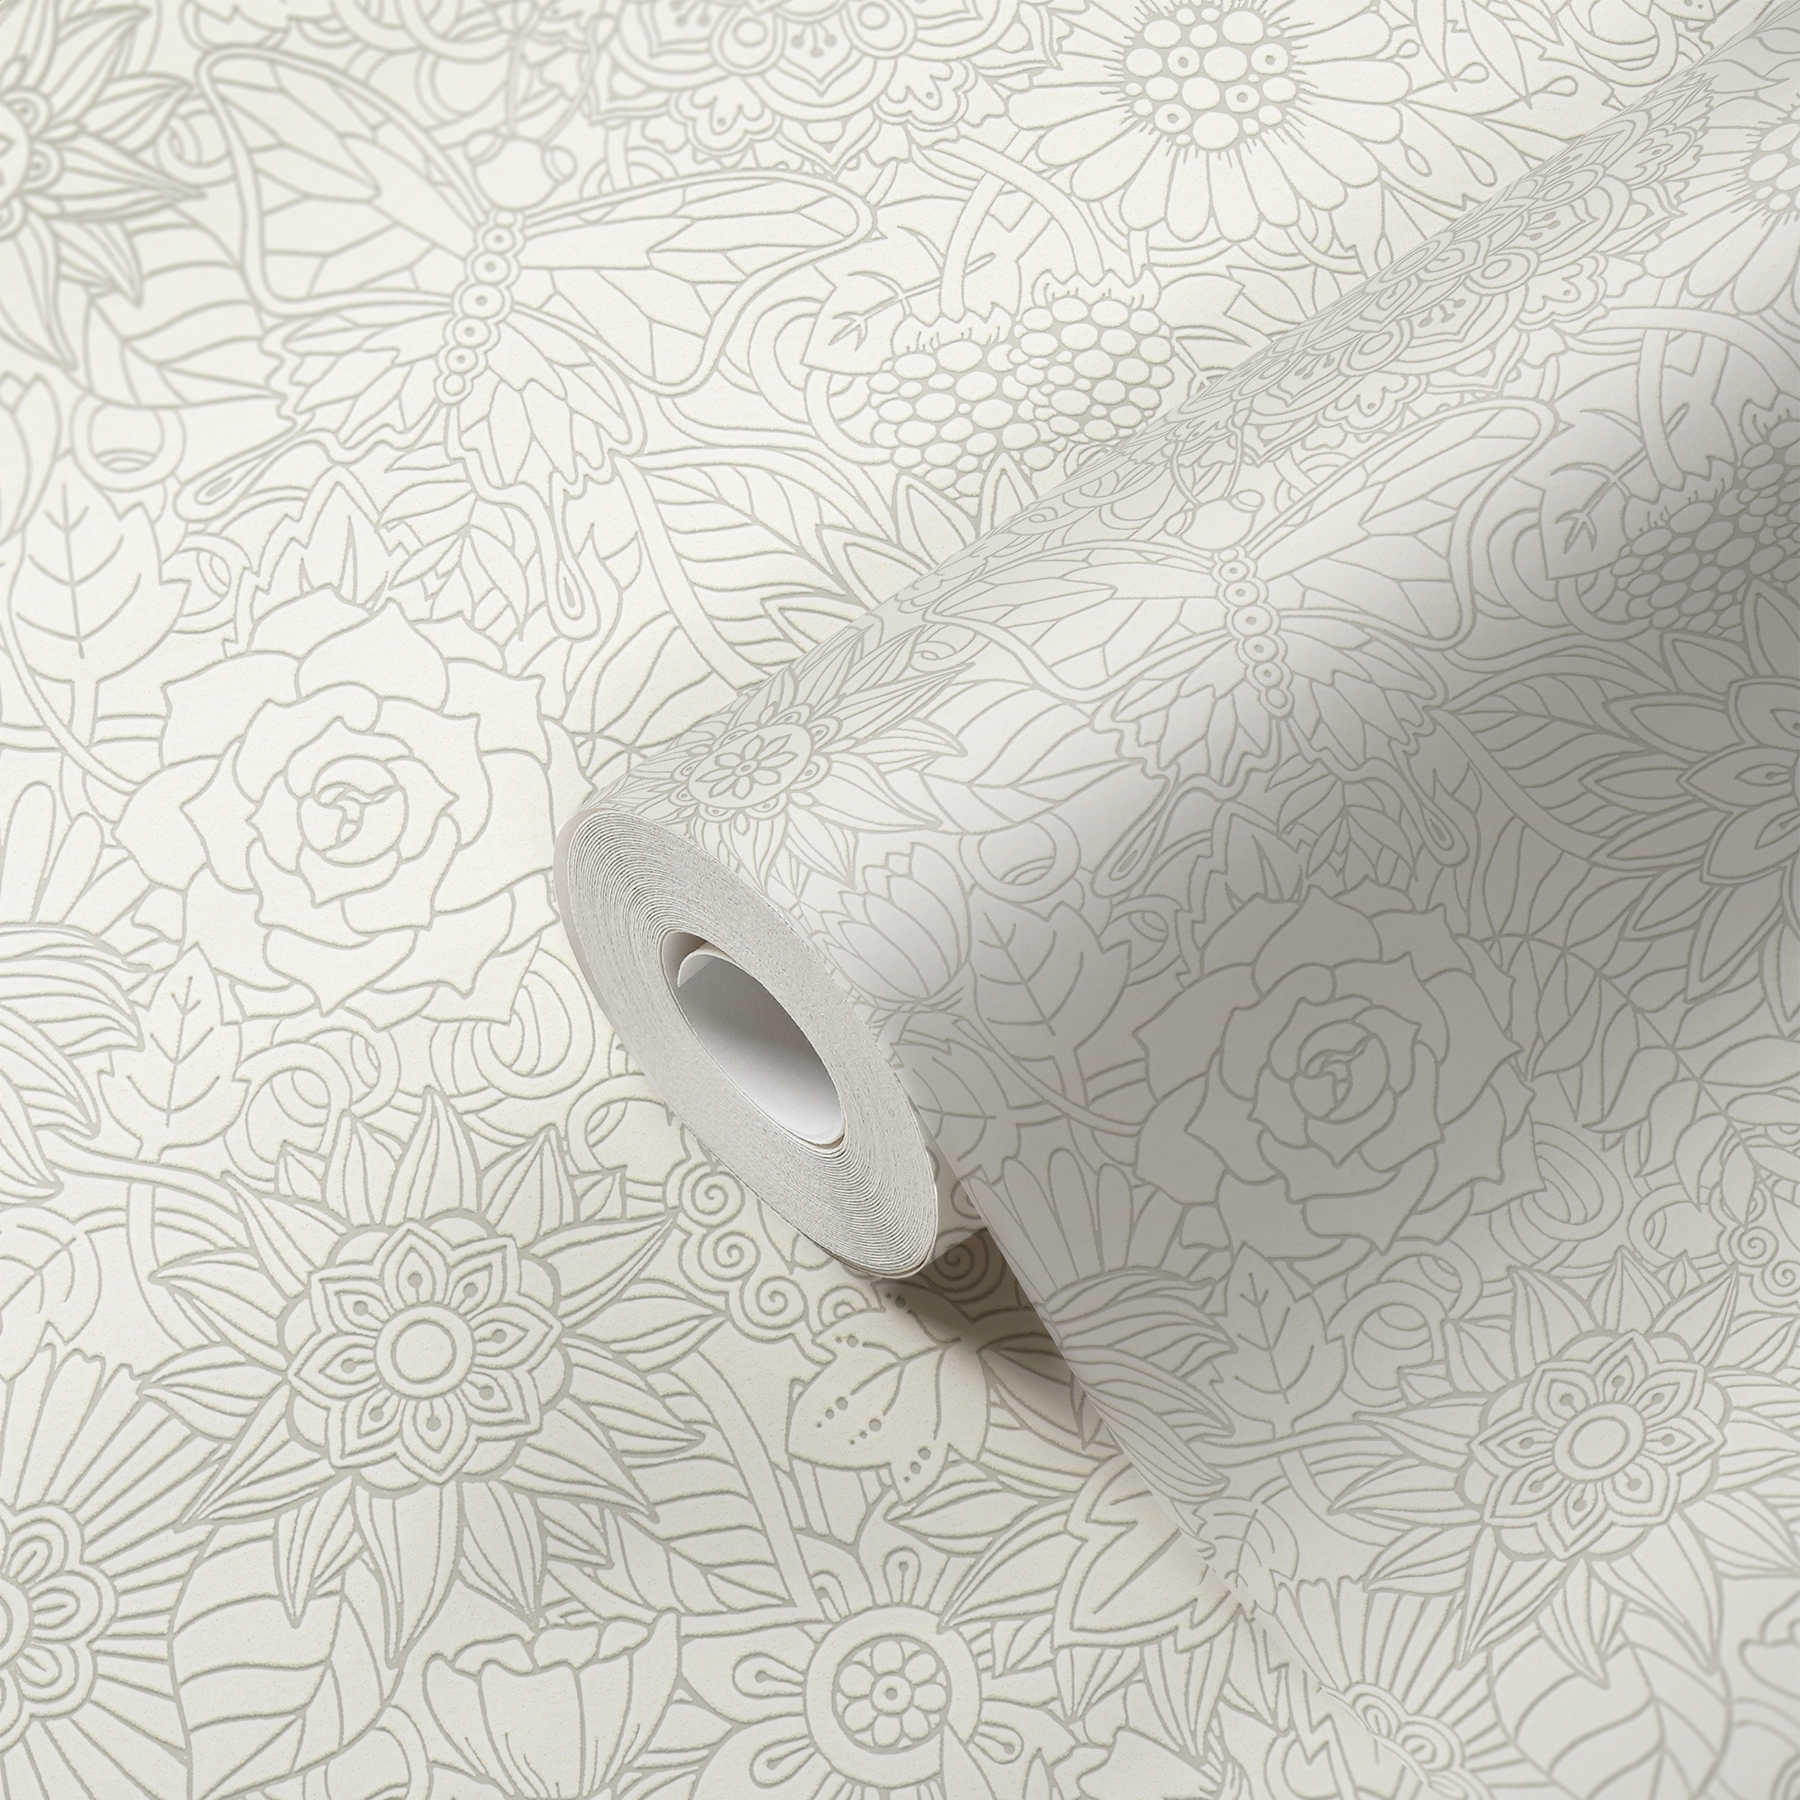             Vliesbehang bloemen doodle design, mat & glanzend - wit,
        